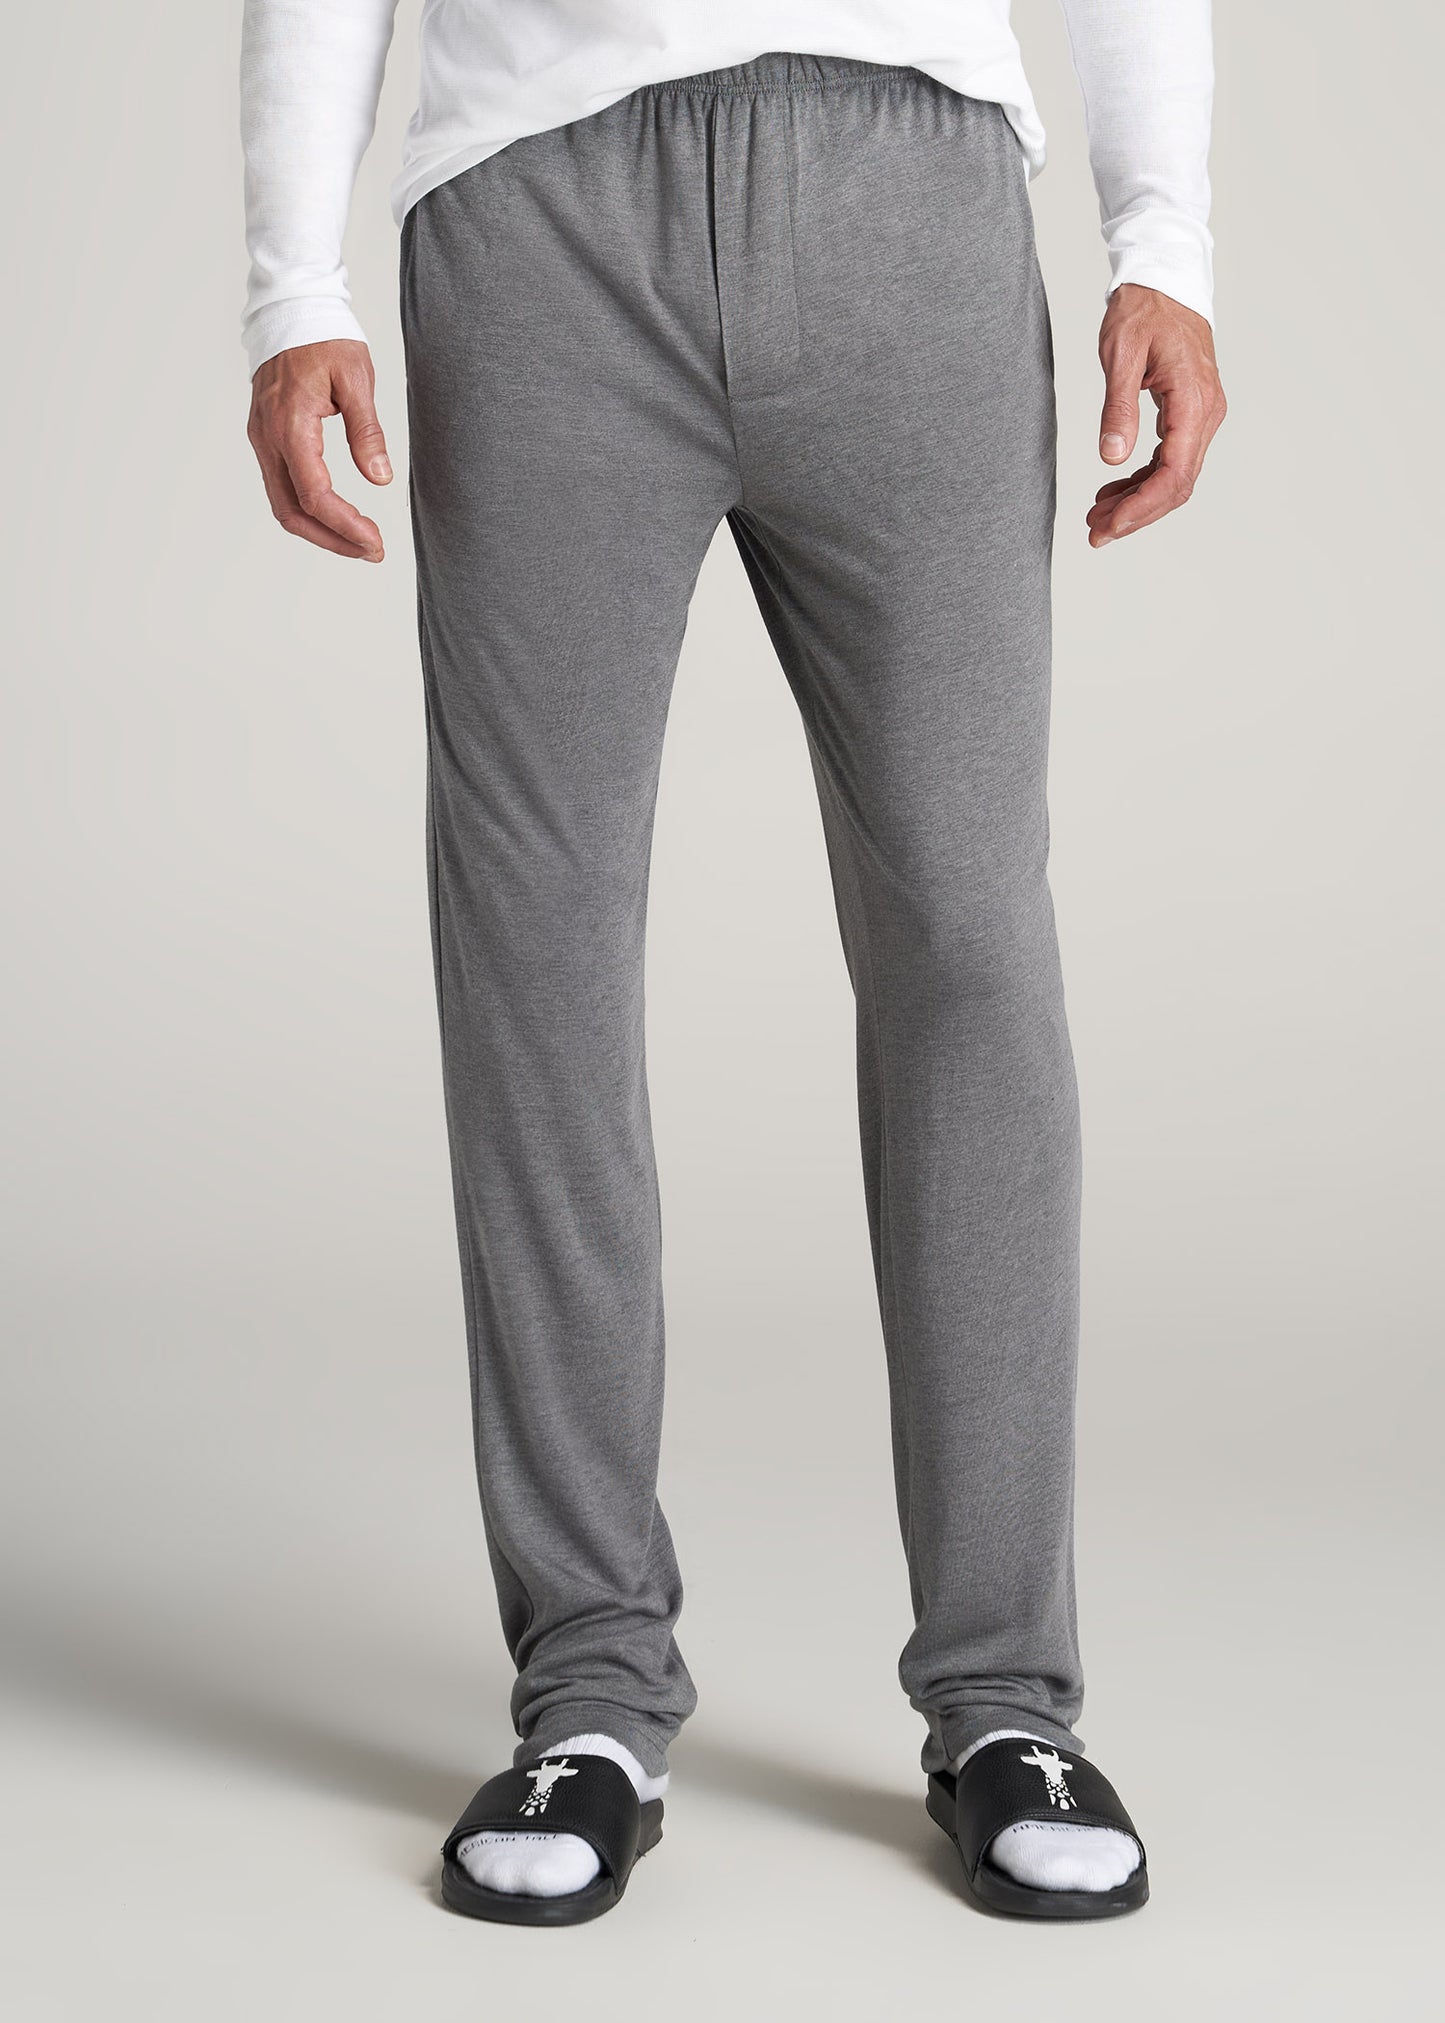       American-Tall-Men-Lounge-PajamaPants-CharcoalMix-front